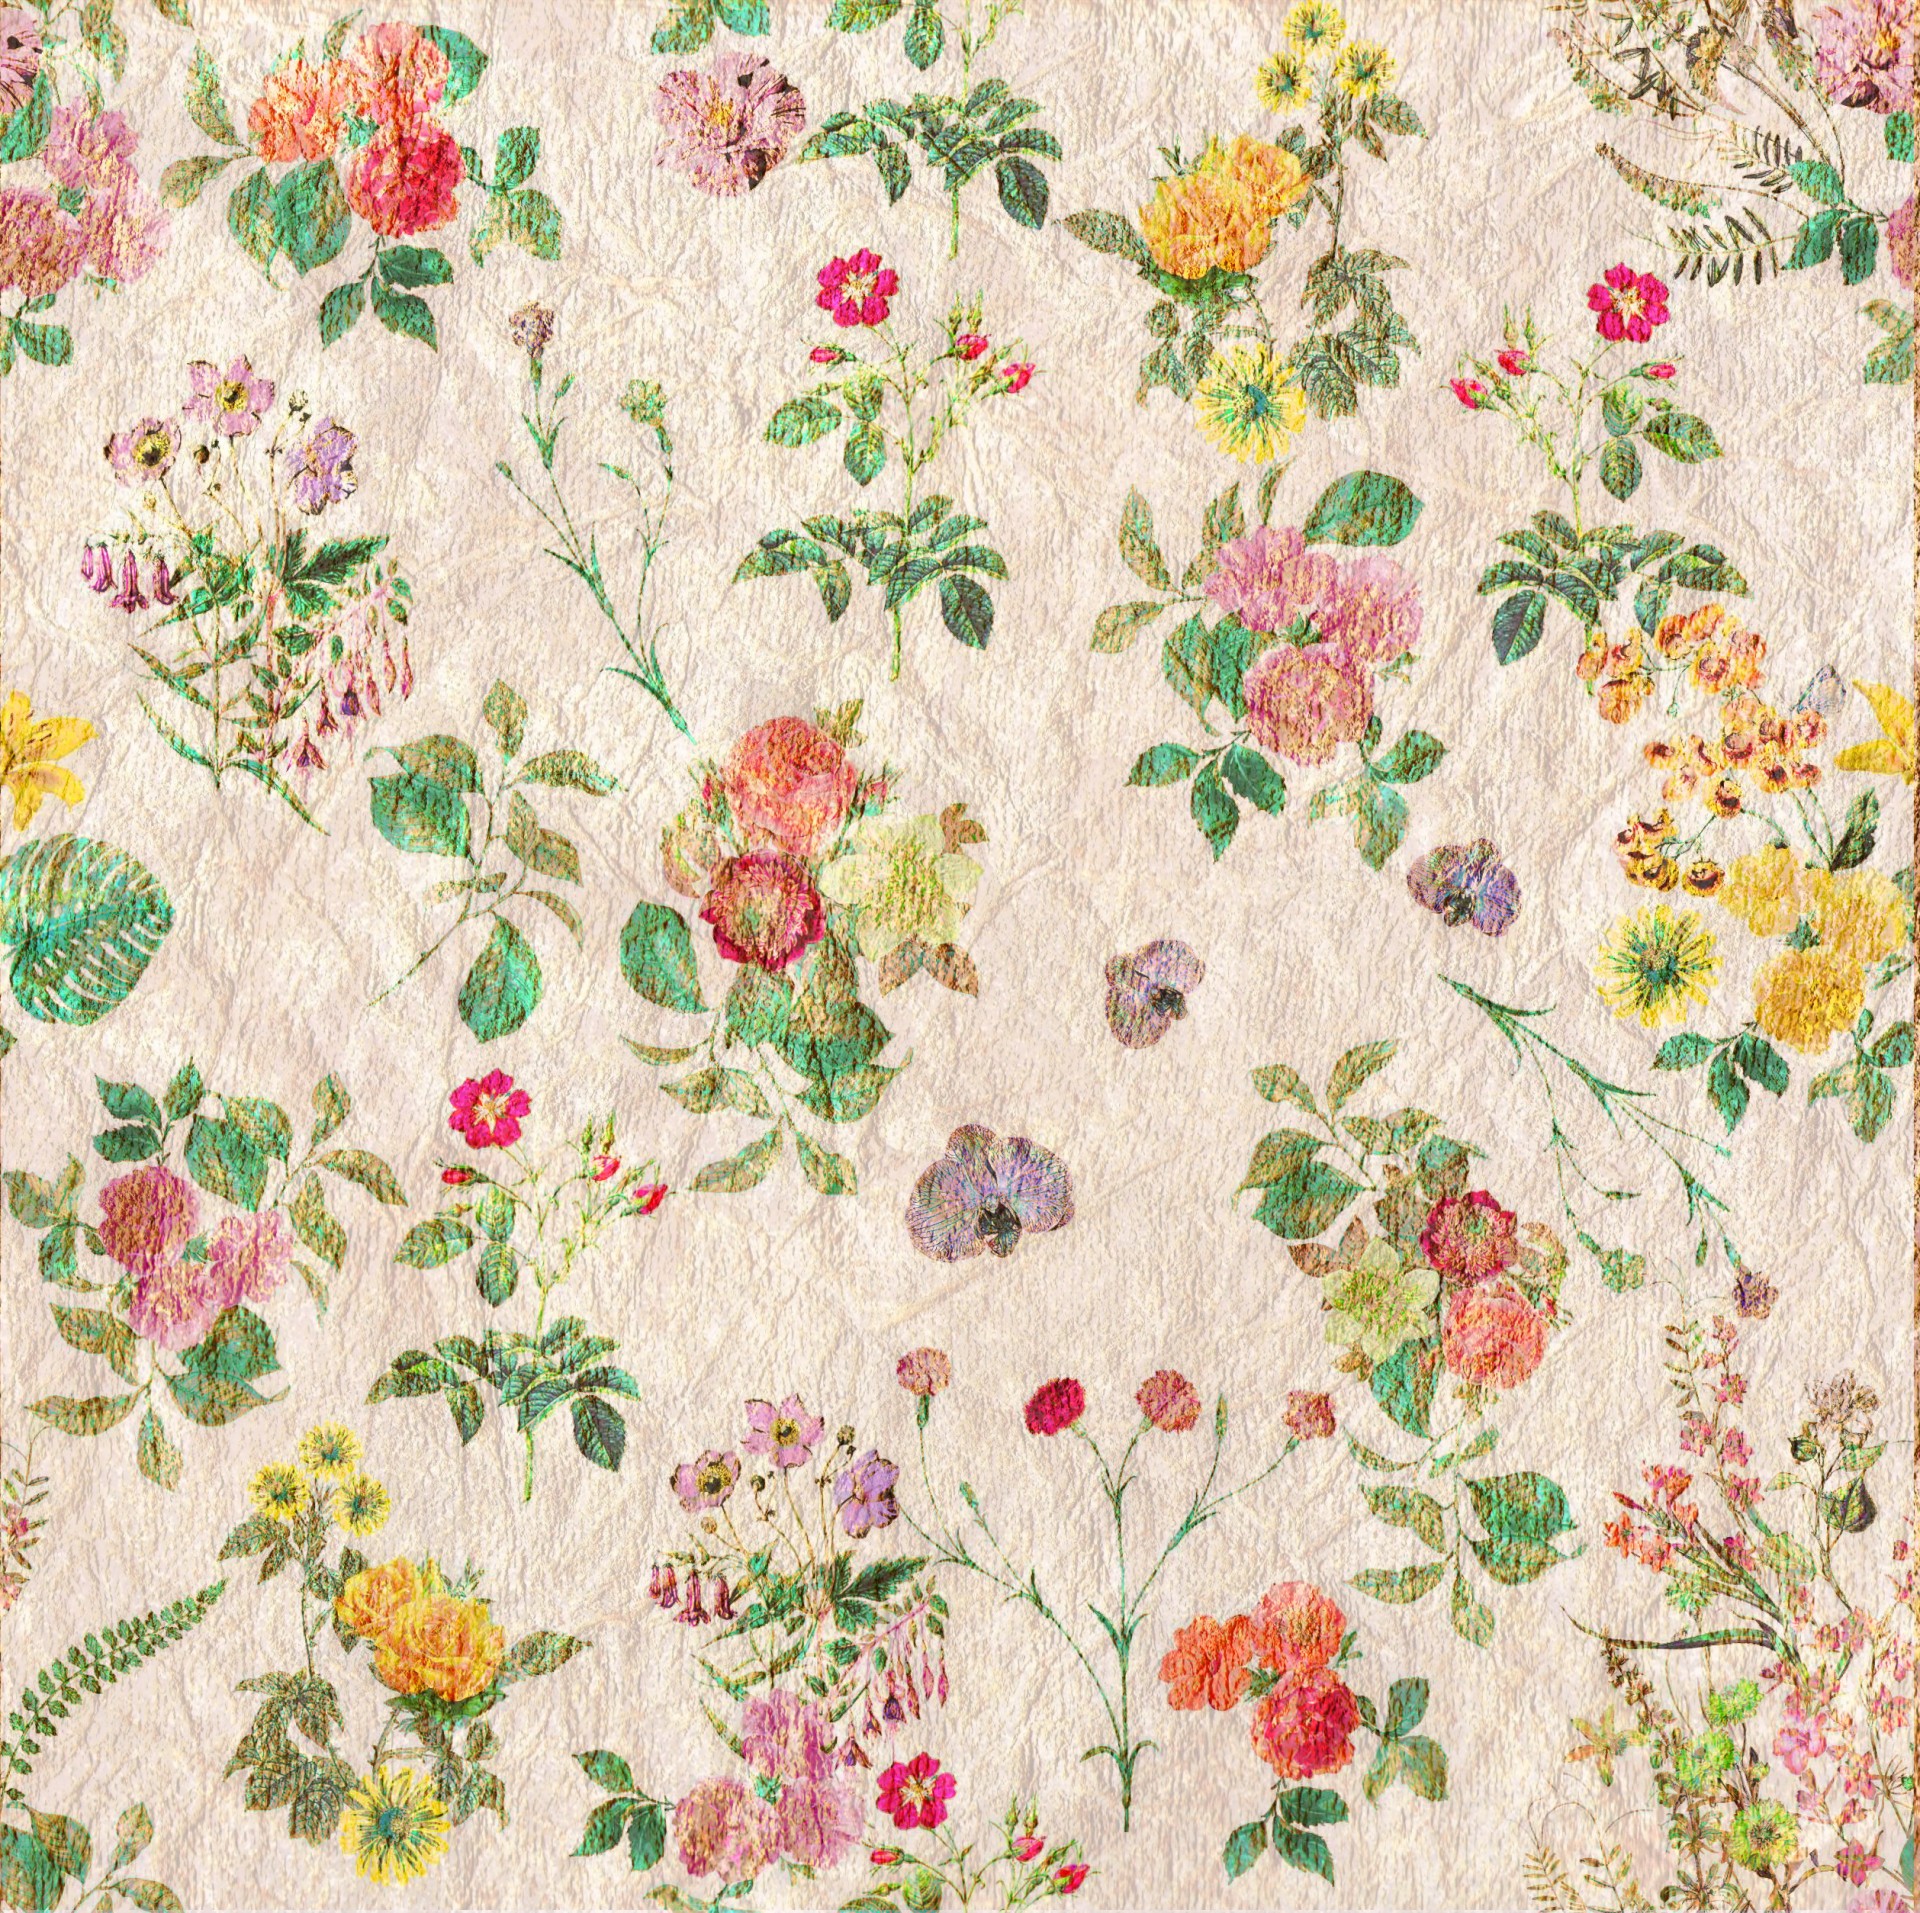 Vintage floral seamless pattern wallpaper background